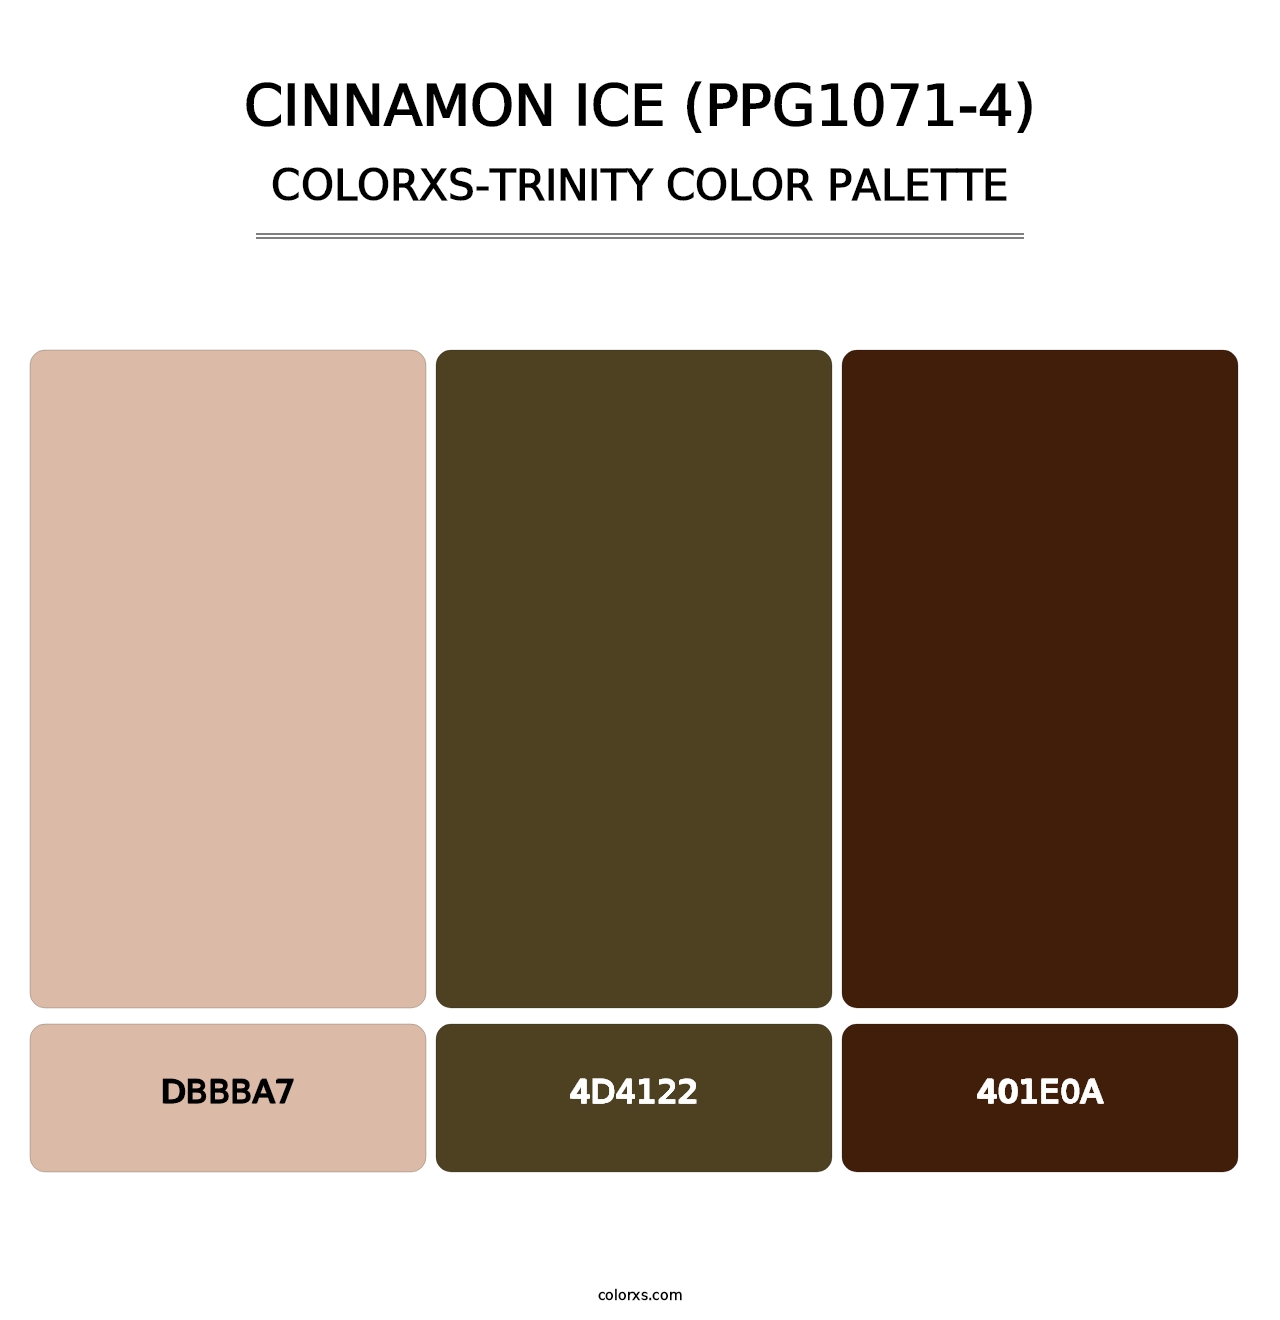 Cinnamon Ice (PPG1071-4) - Colorxs Trinity Palette